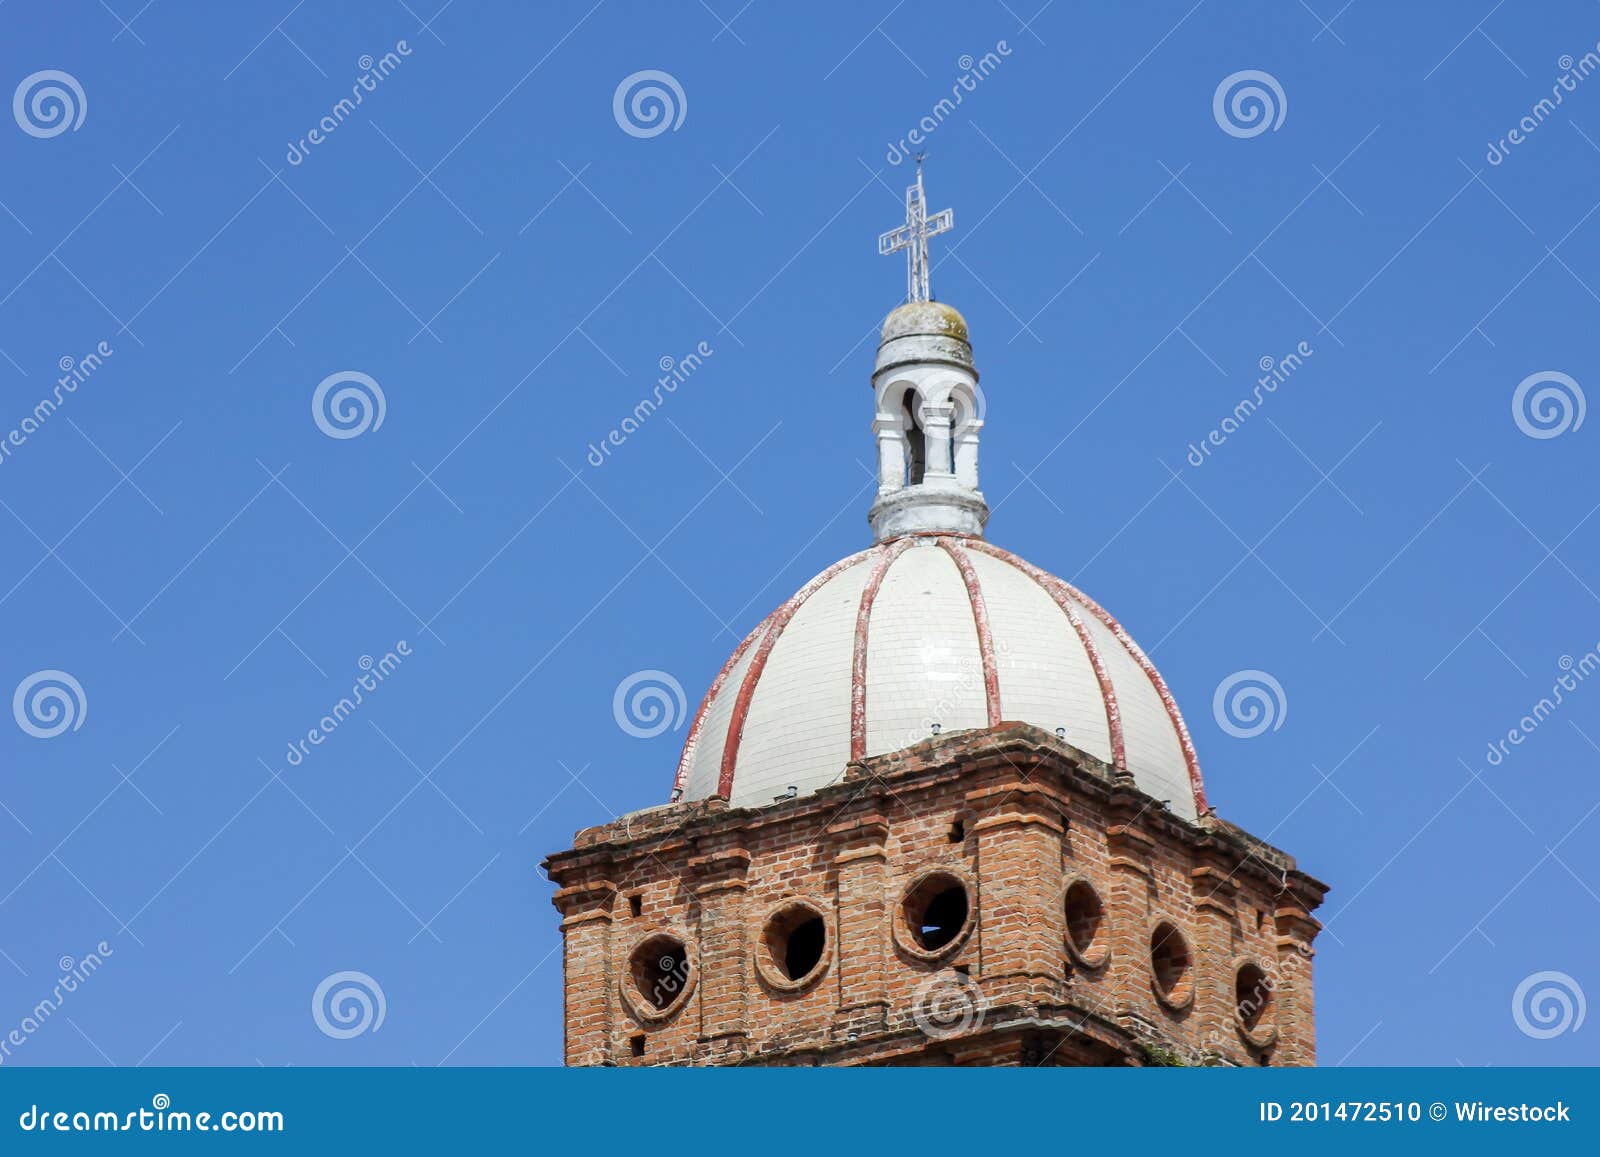 parish of san antonio in tapalpa, mexico